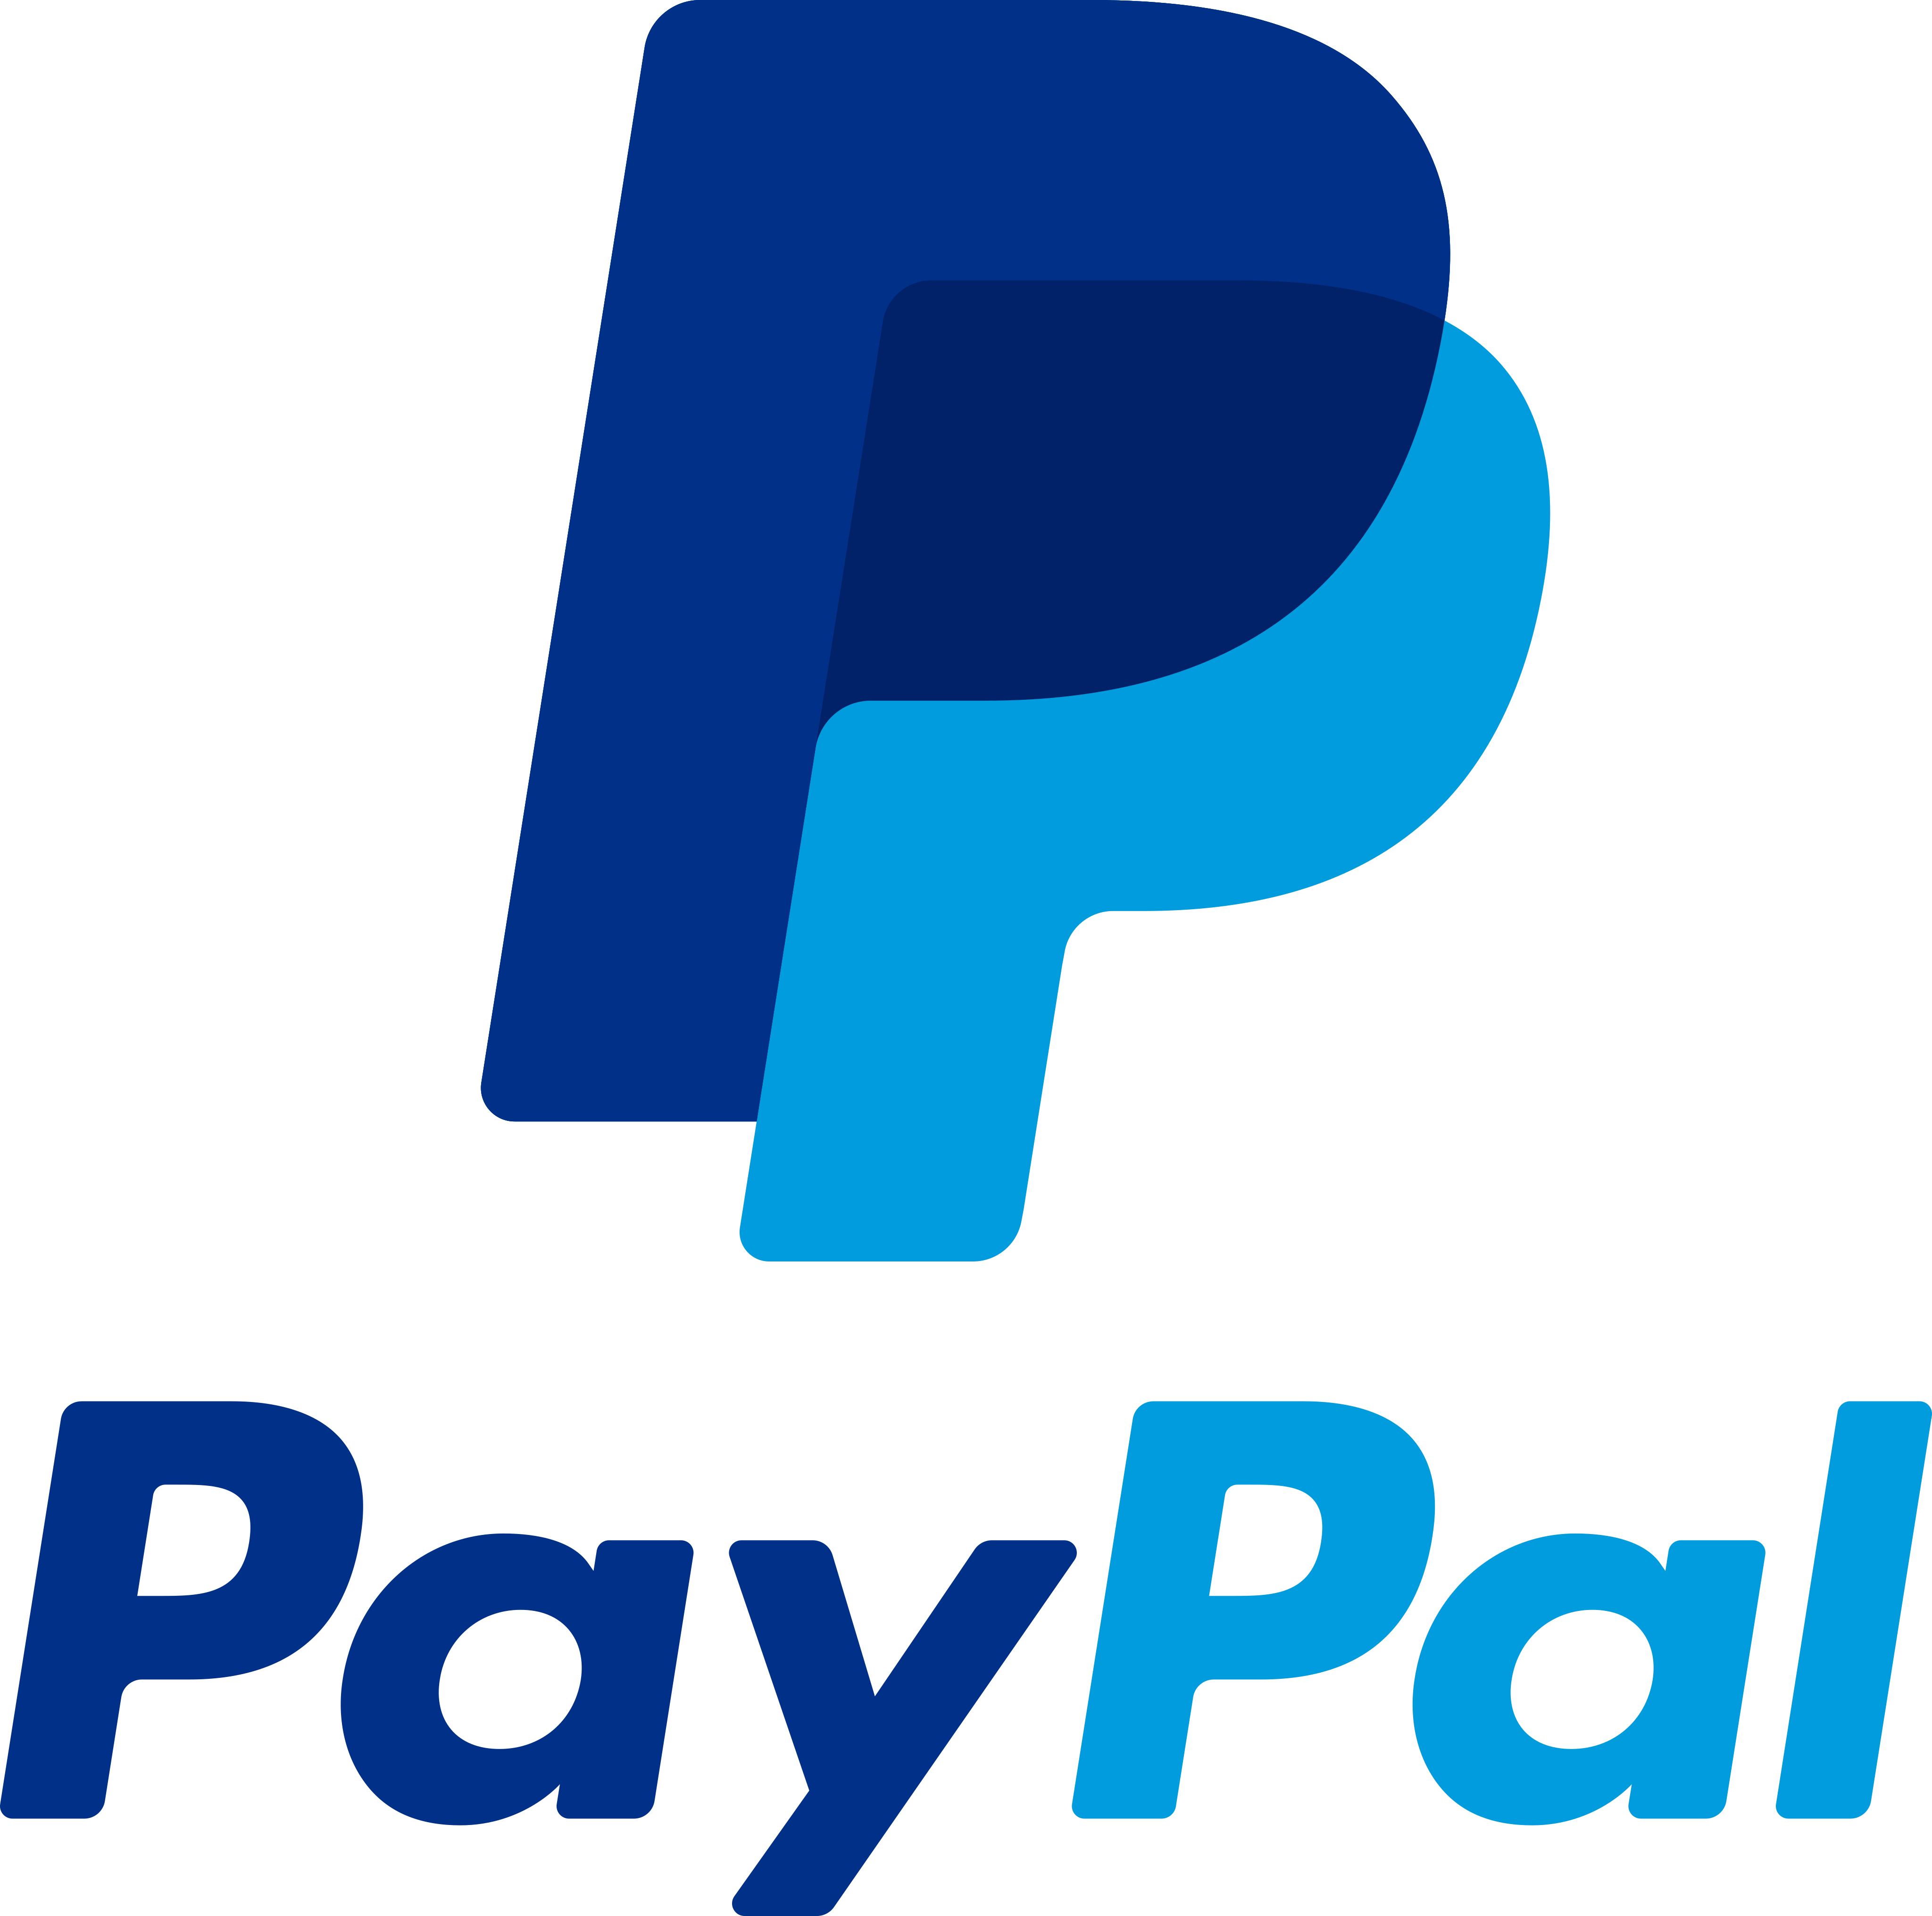 paypal-logo-1-1